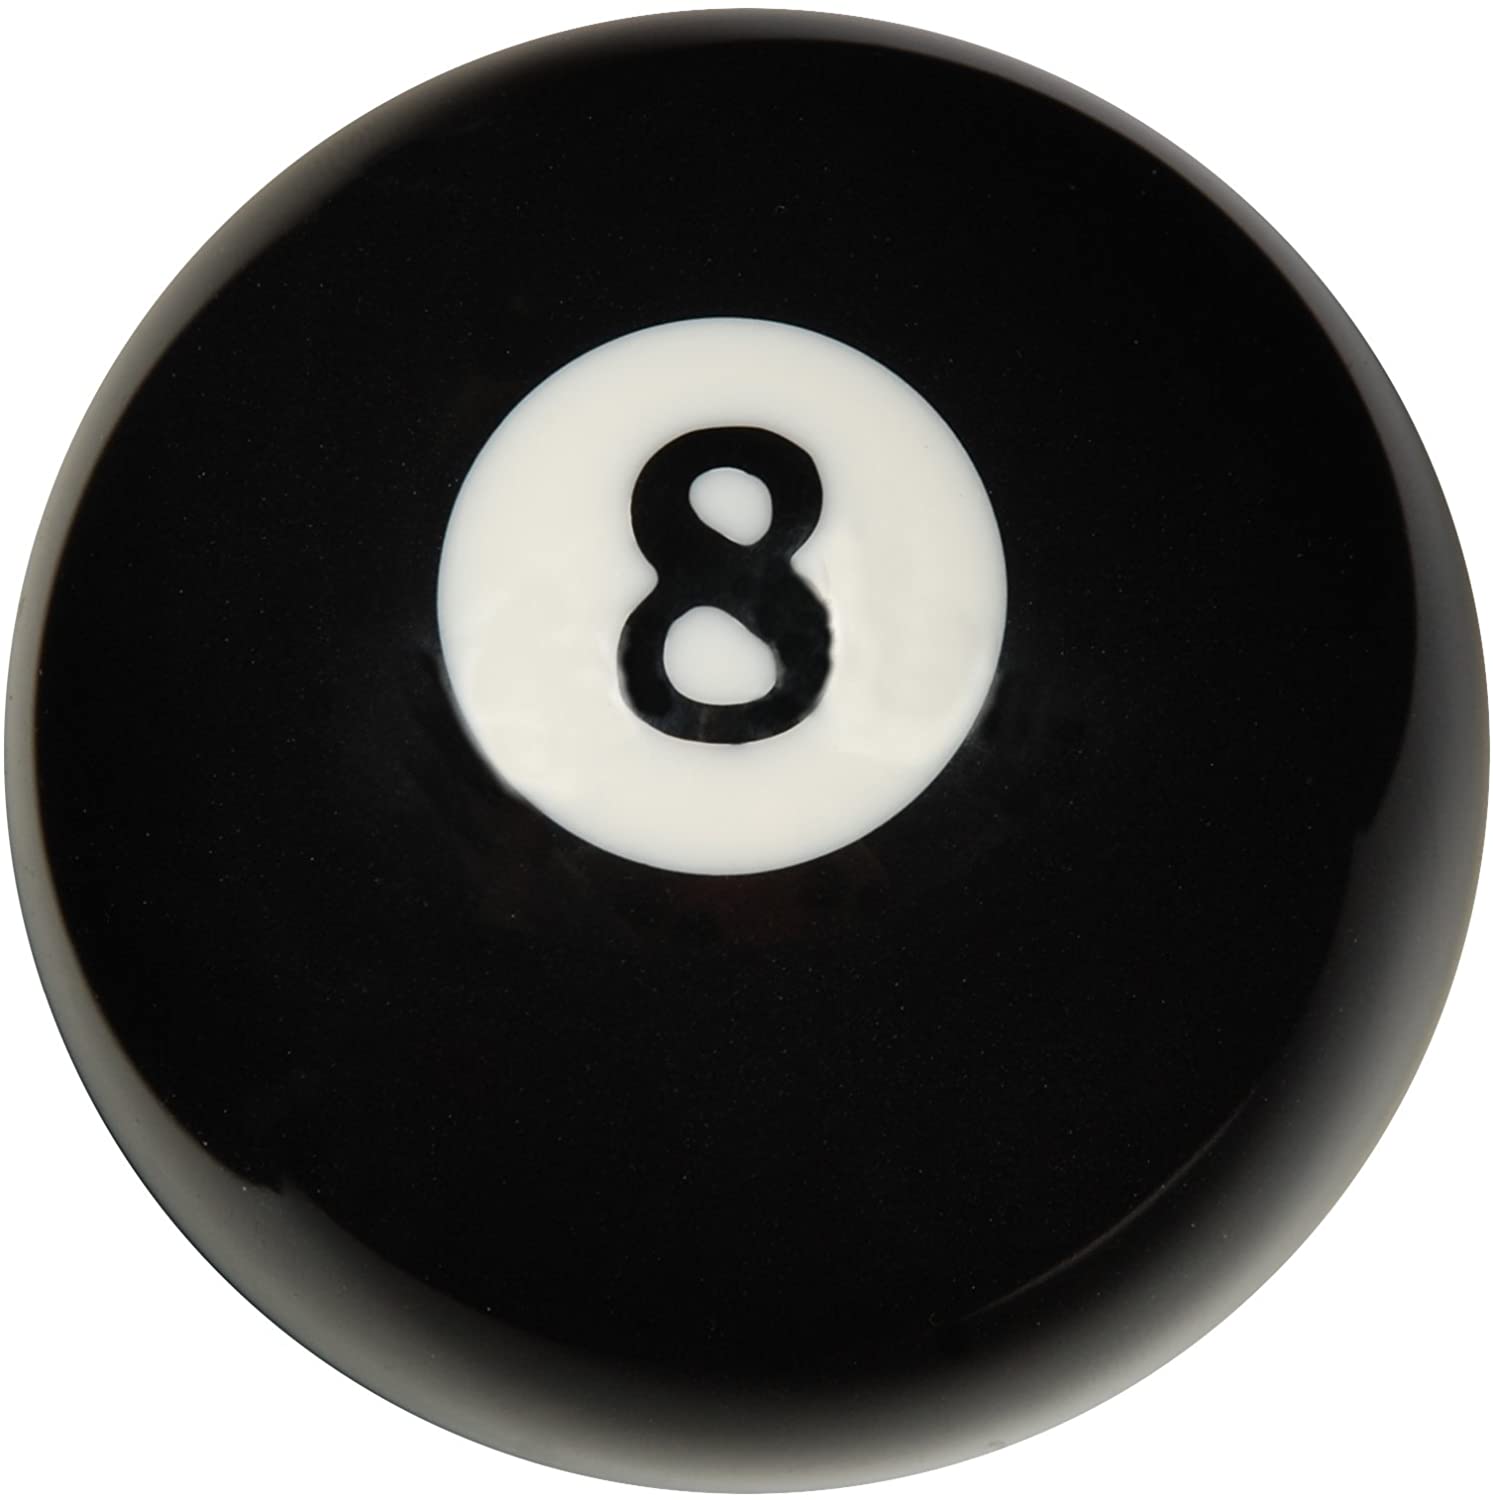 8 Ball Standard Size 2-1/4" Billiard Ball Production Item